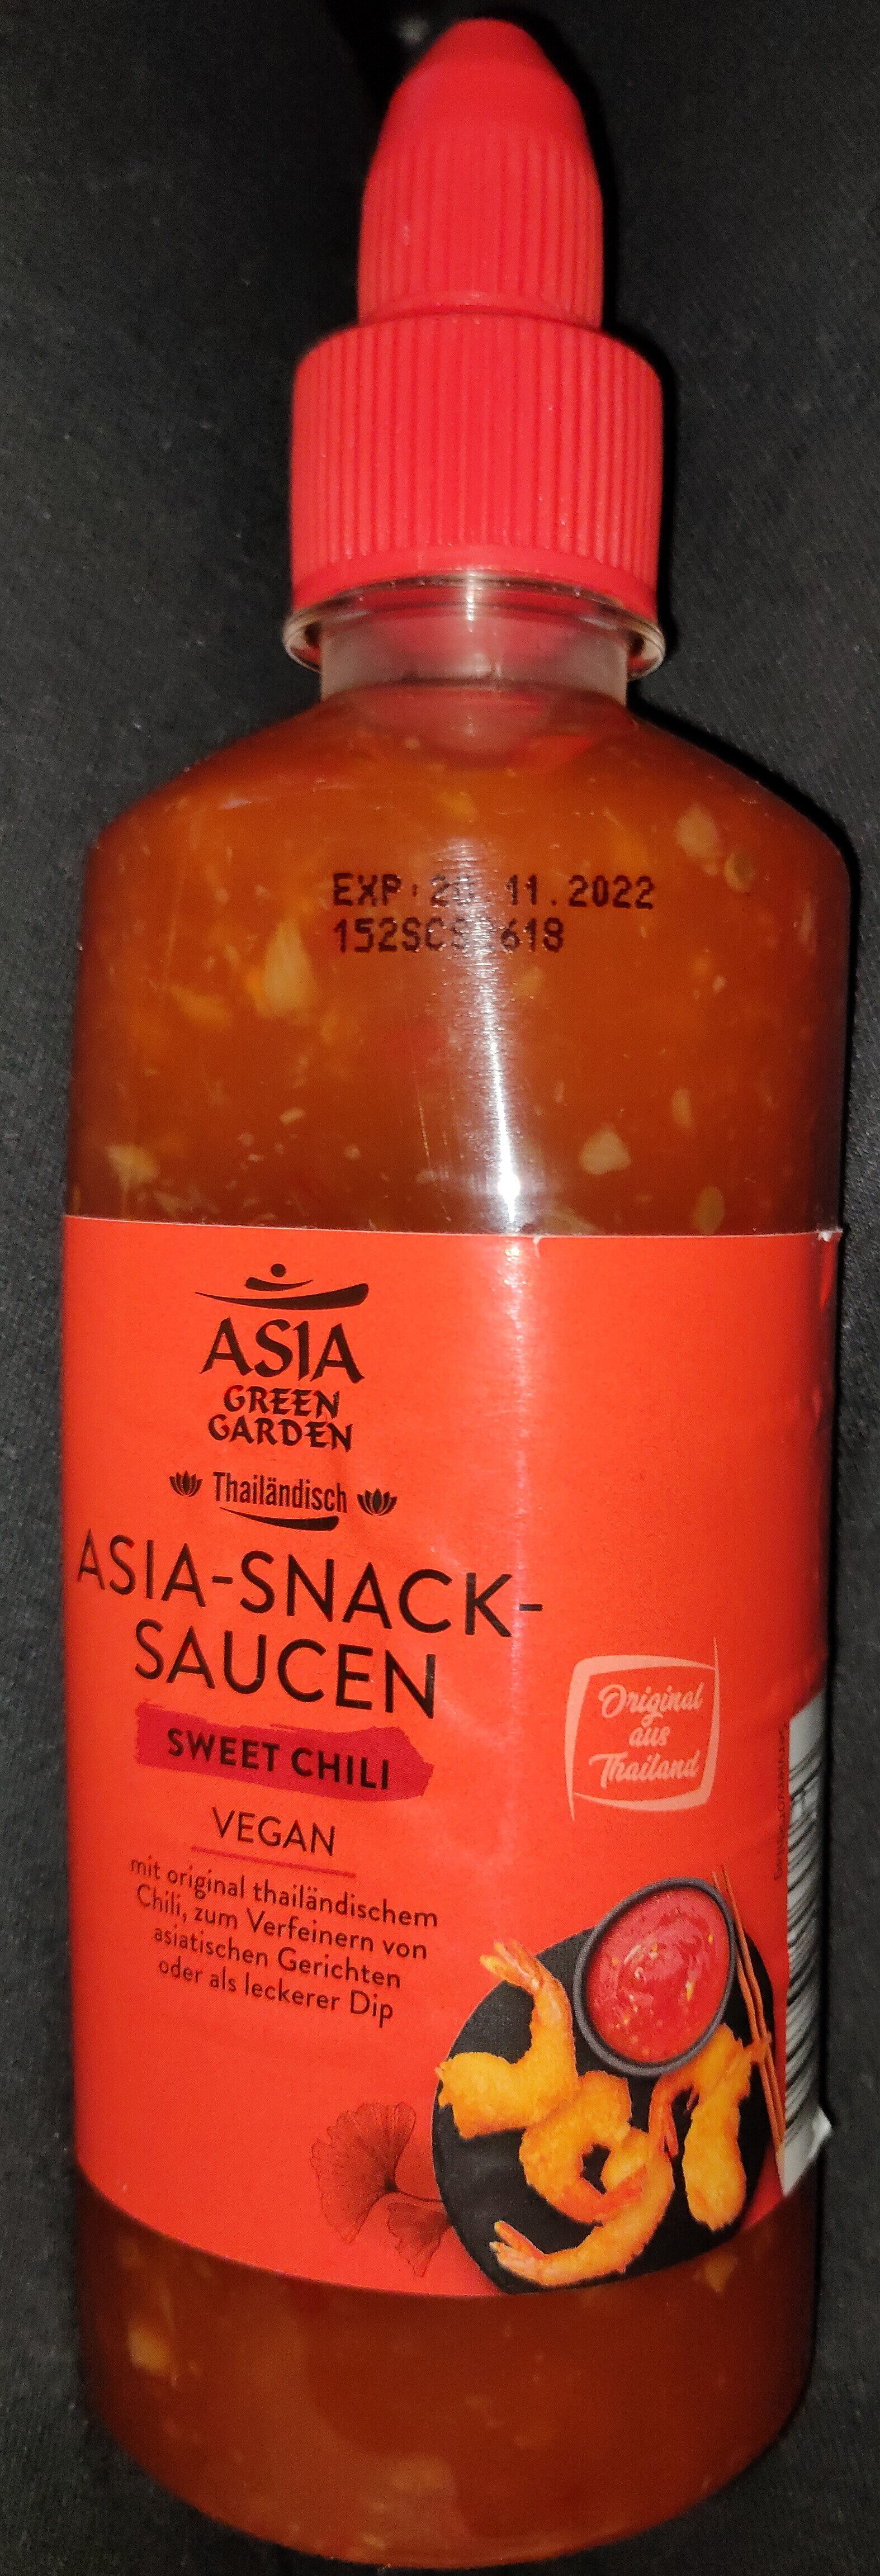 Asia-Snack-Saucen - Sweet Chili - Producto - de